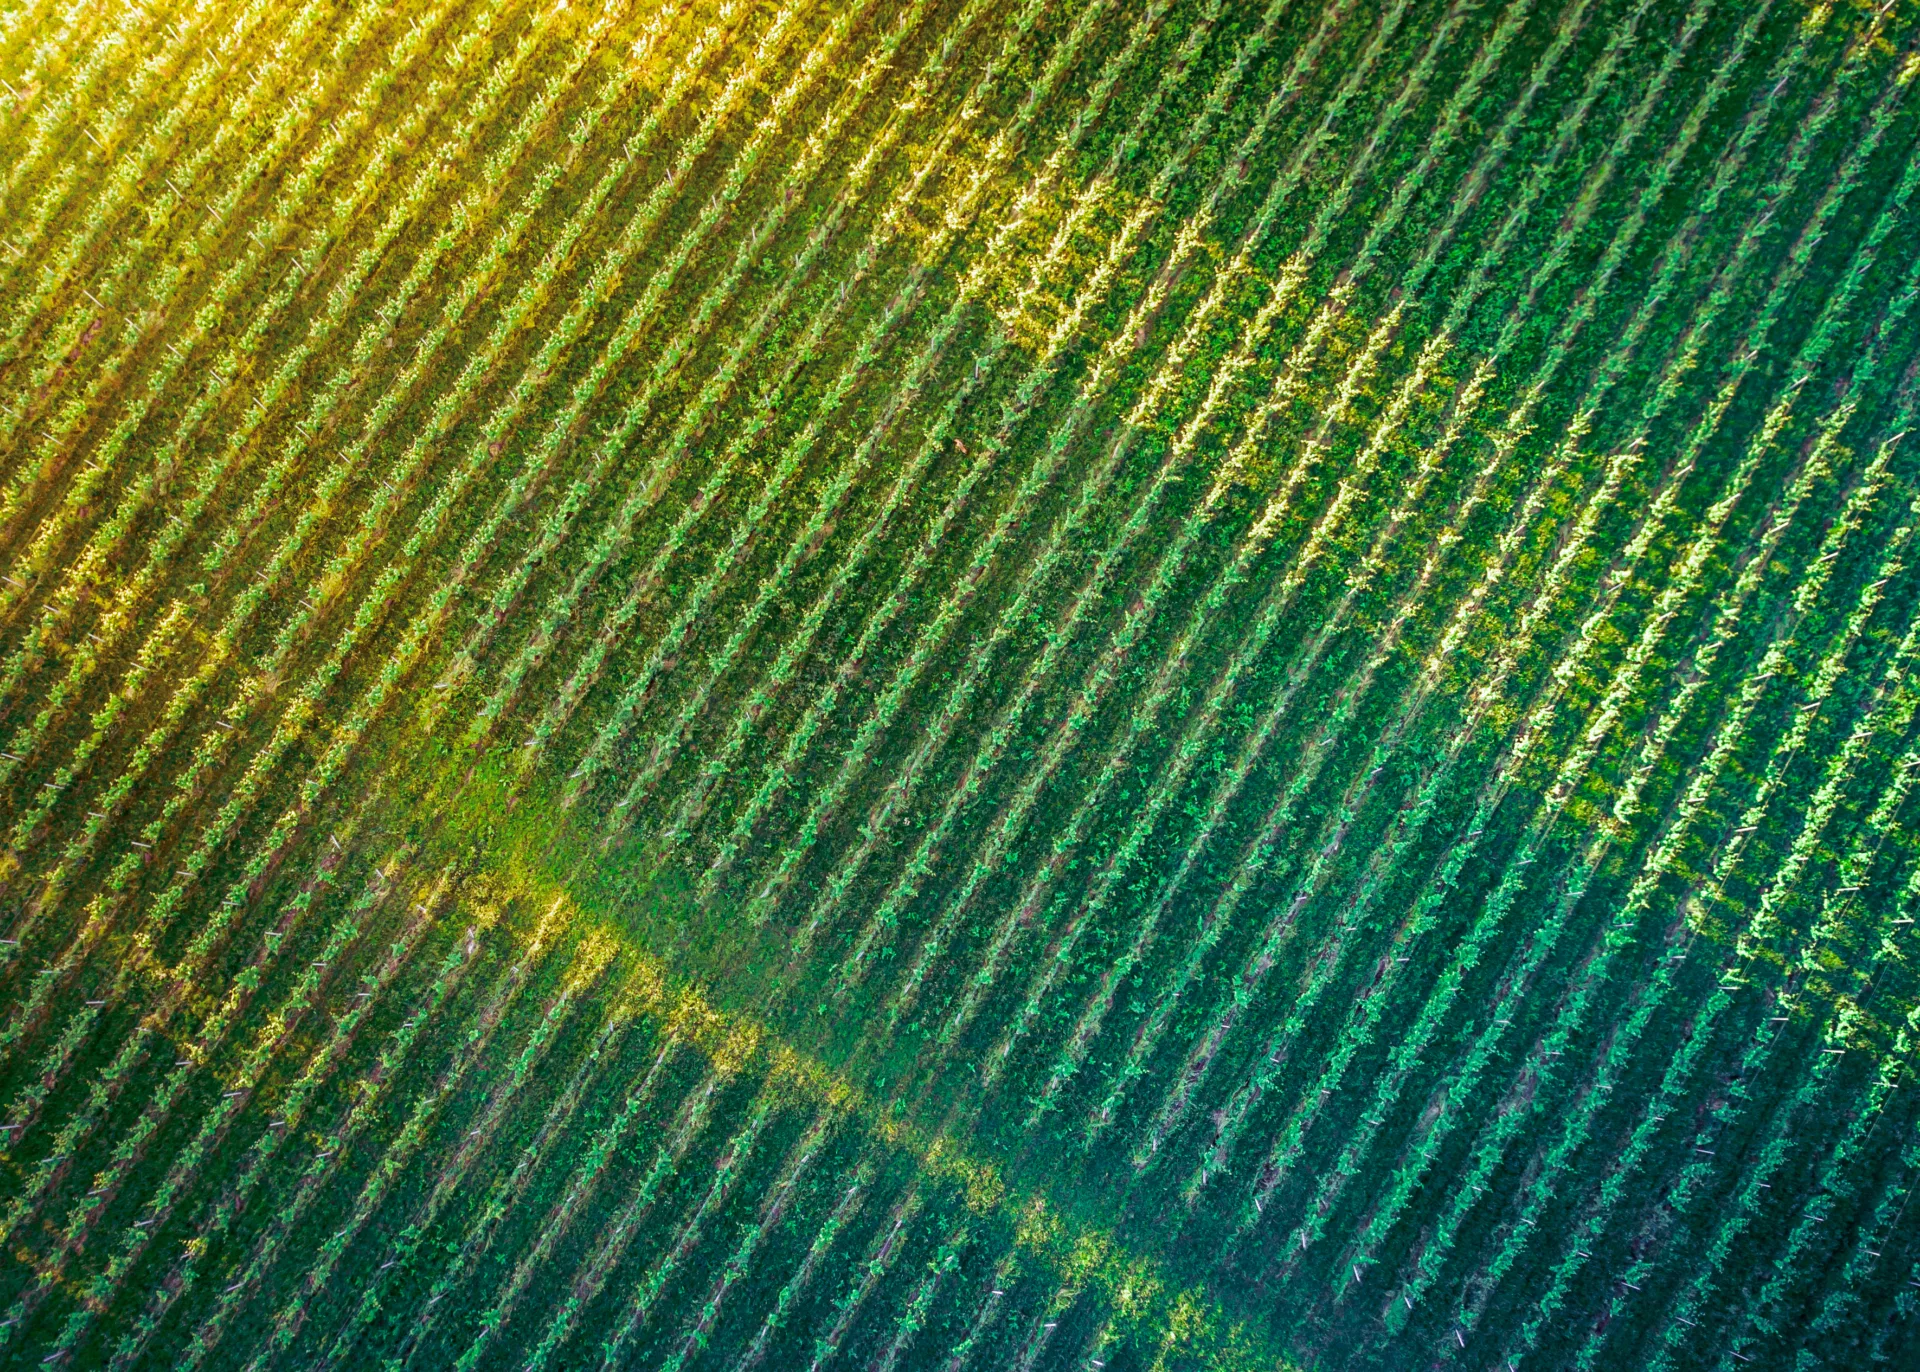 Heartland Organics Corn Field